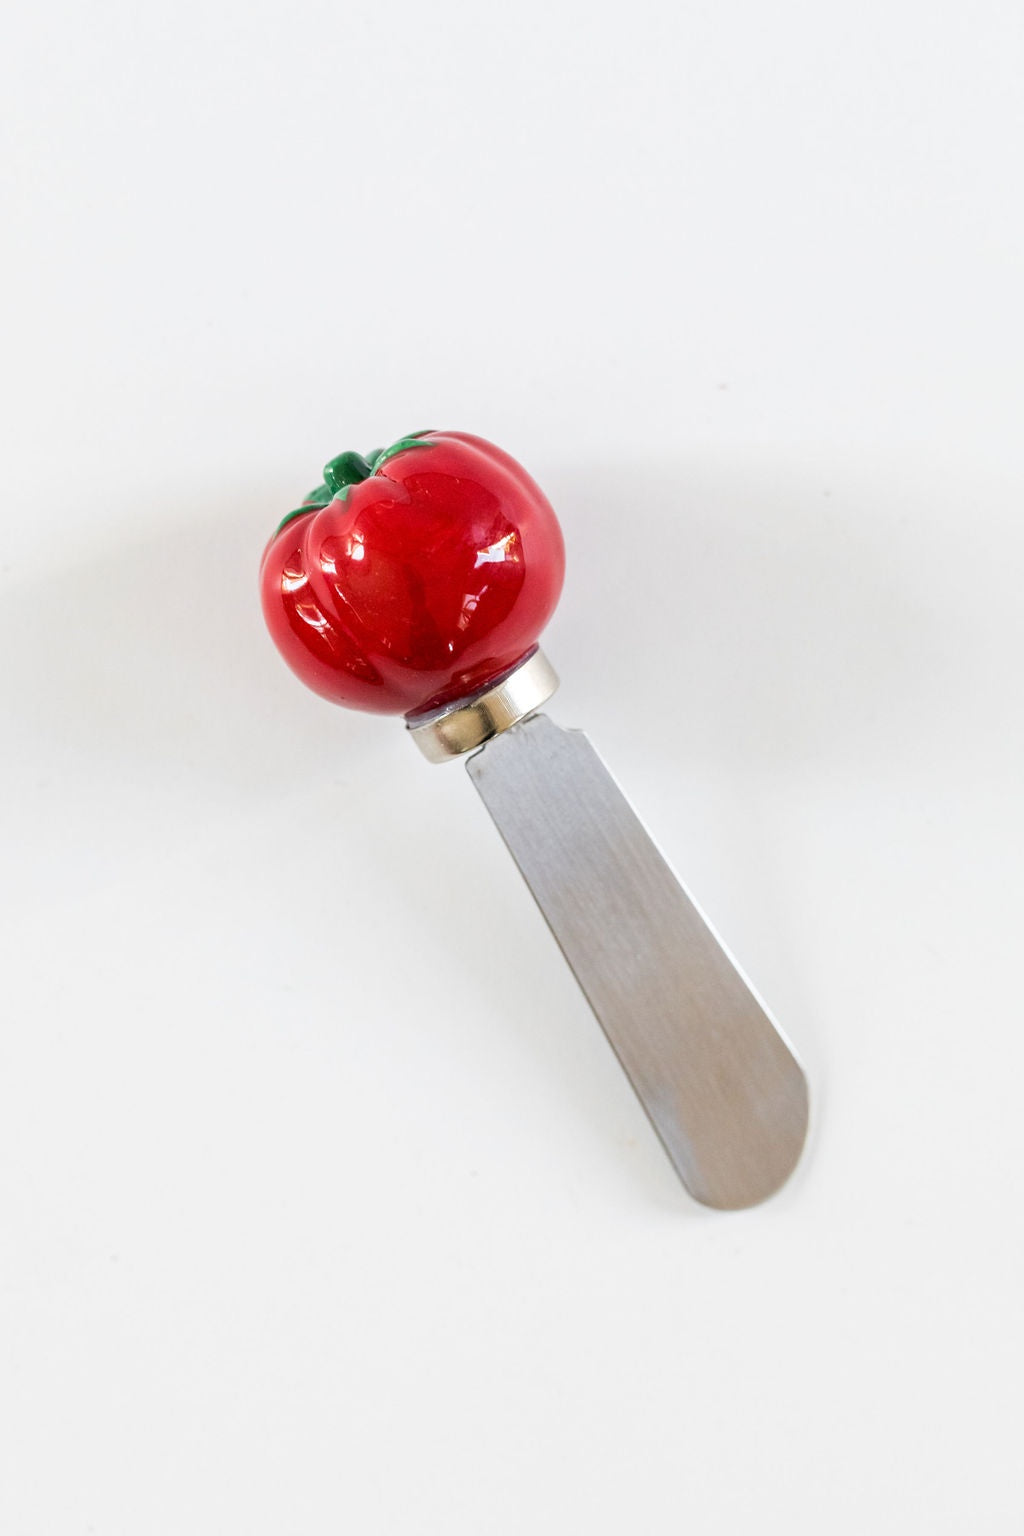 Tomato Spreader